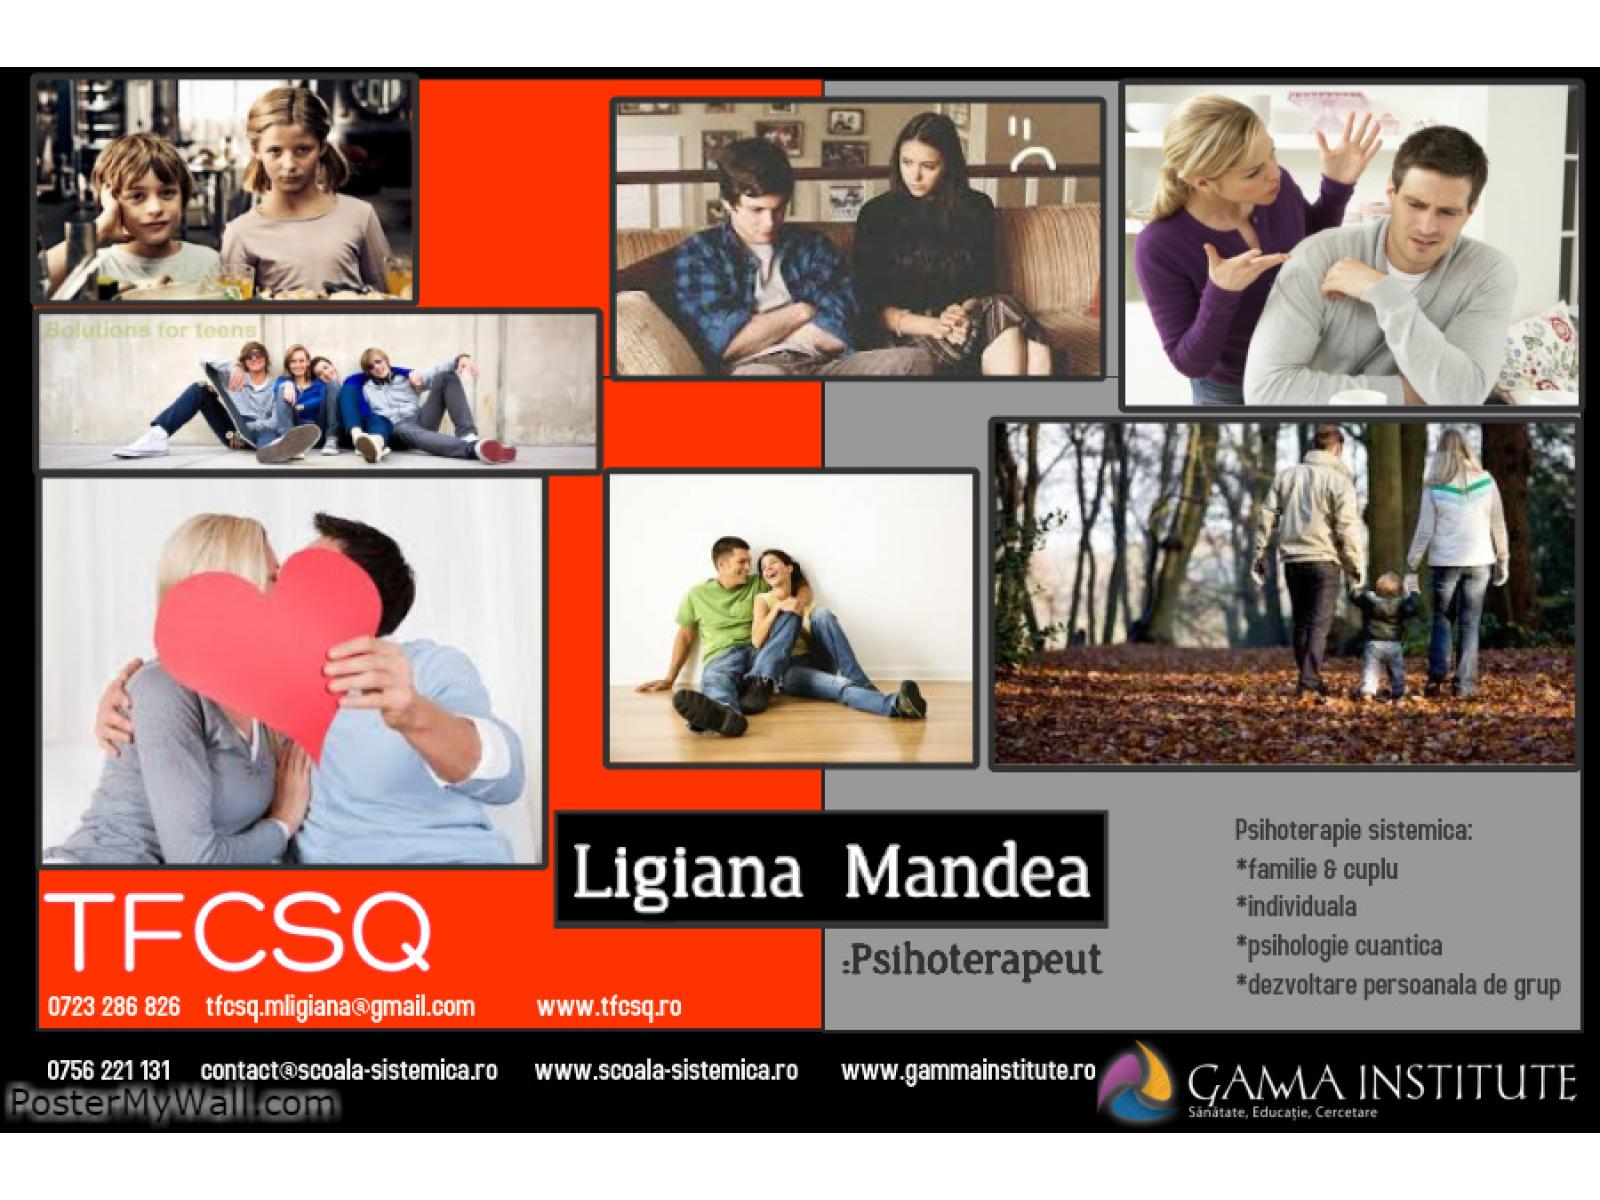 Cabinet Individual de Psihologie Mandea Mariana Ligiana - card_online_tfcsq-gamma.jpg